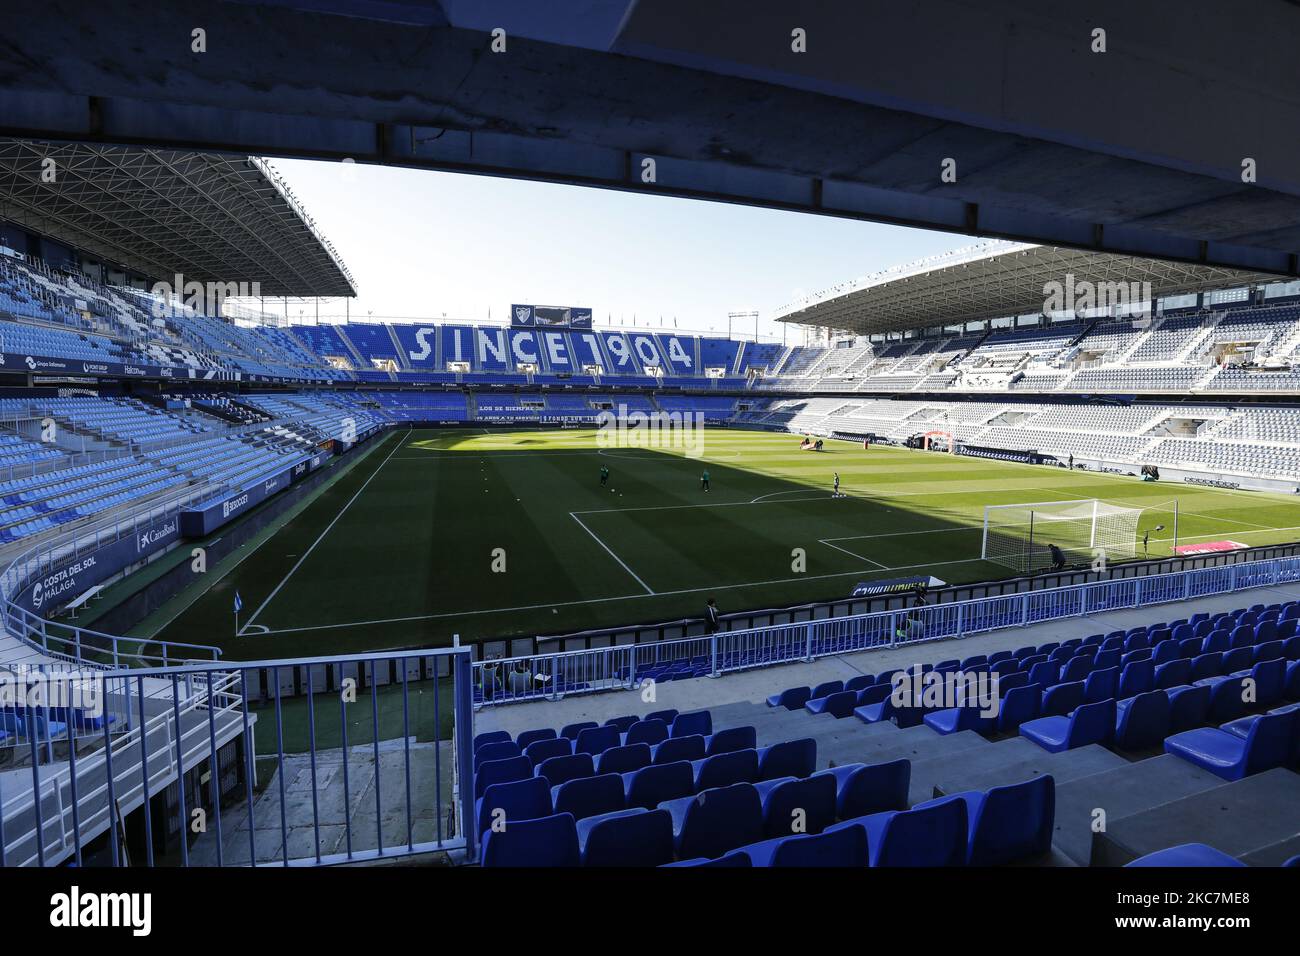 A Look Inside the Football Stadium of Malaga Editorial Stock Photo